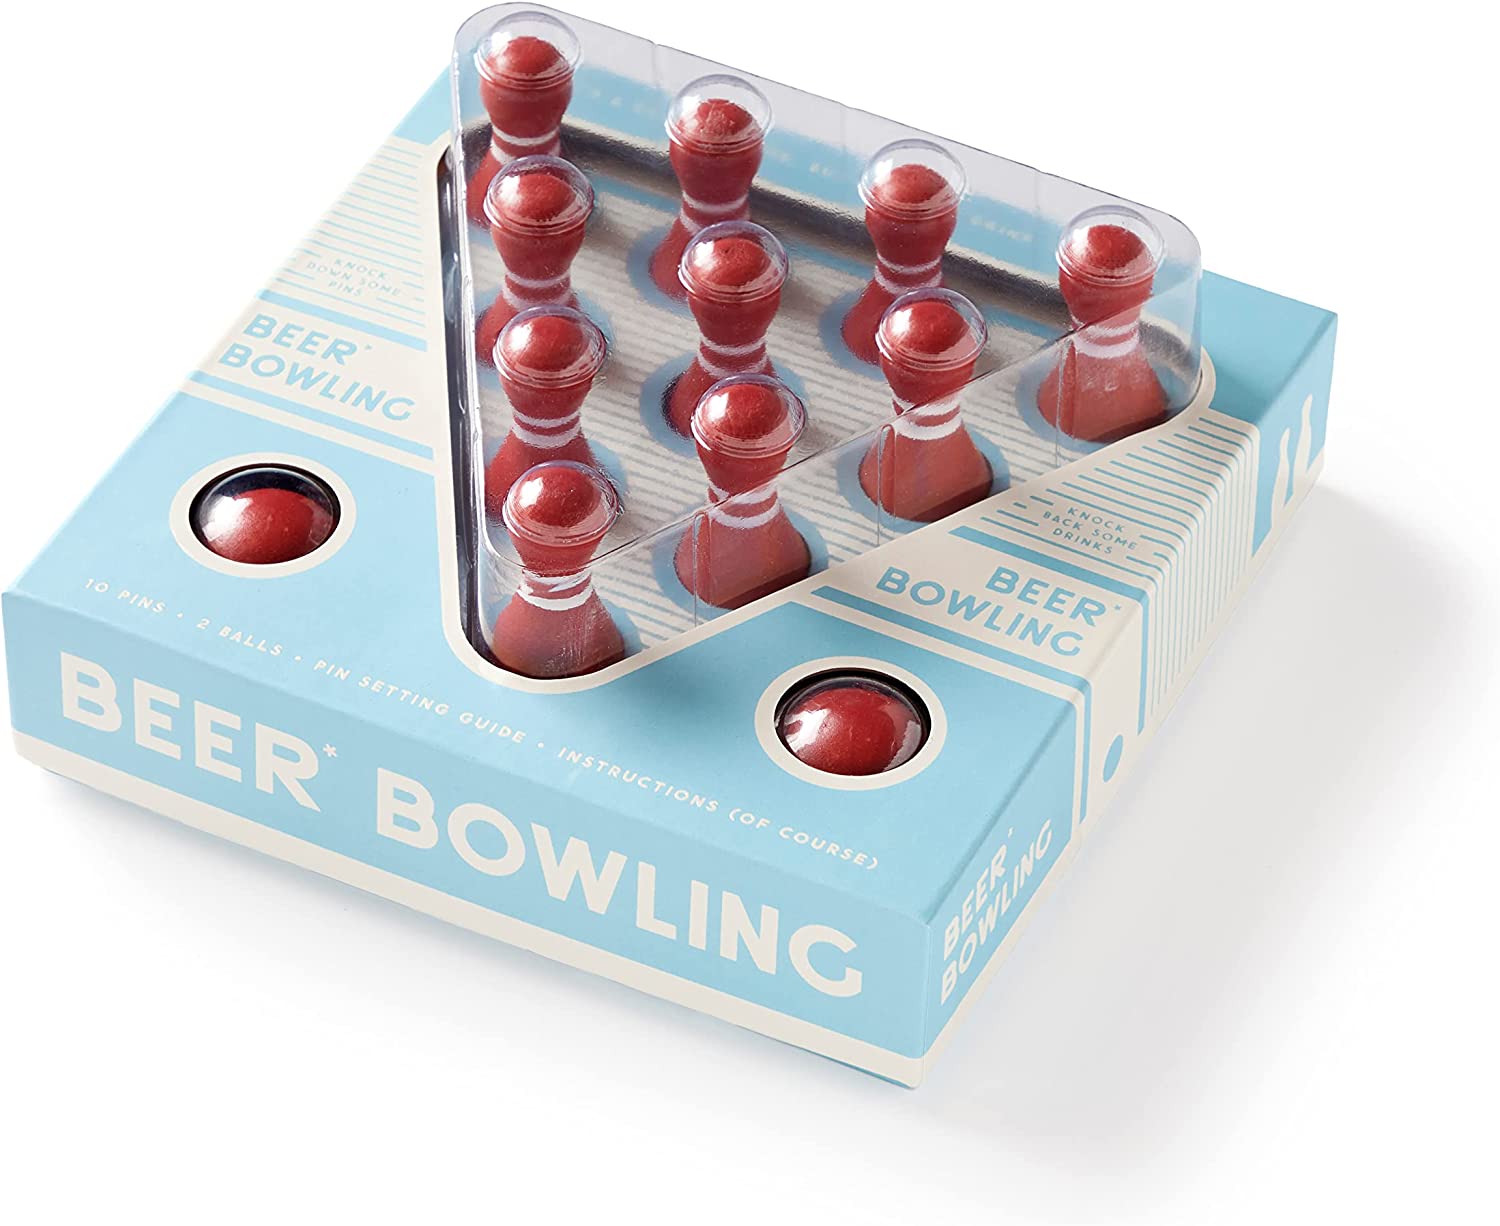 Beer Bowling Drinking Game Set